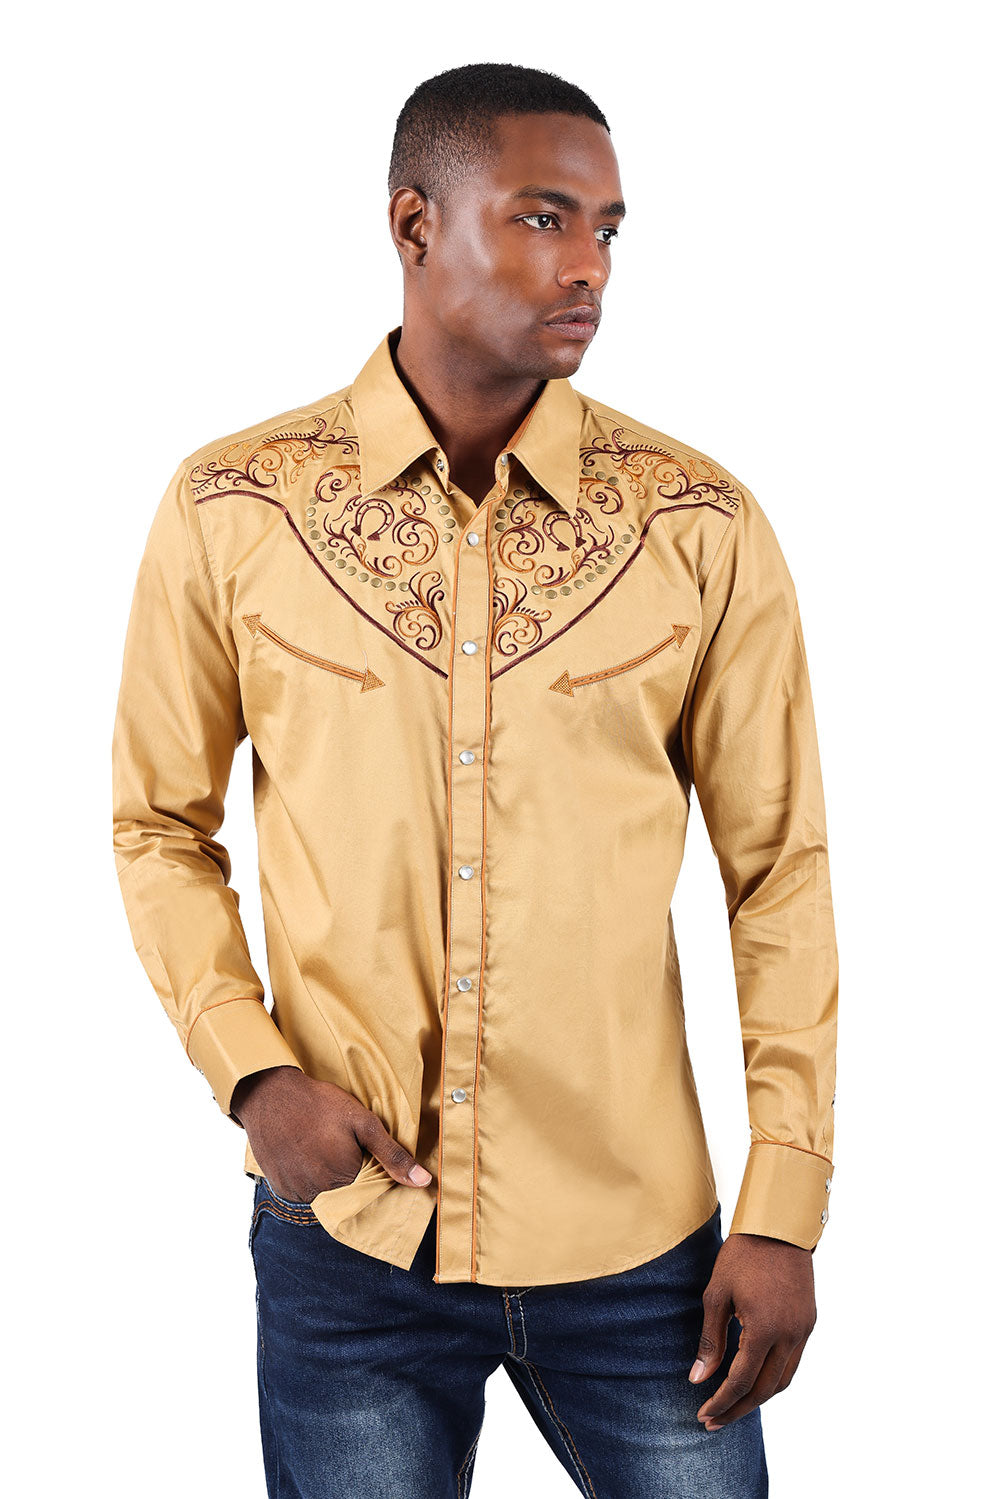 BARABAS Men's Floral Arrow Embroidery Long Sleeve Western Shirts 3WS7 Cream